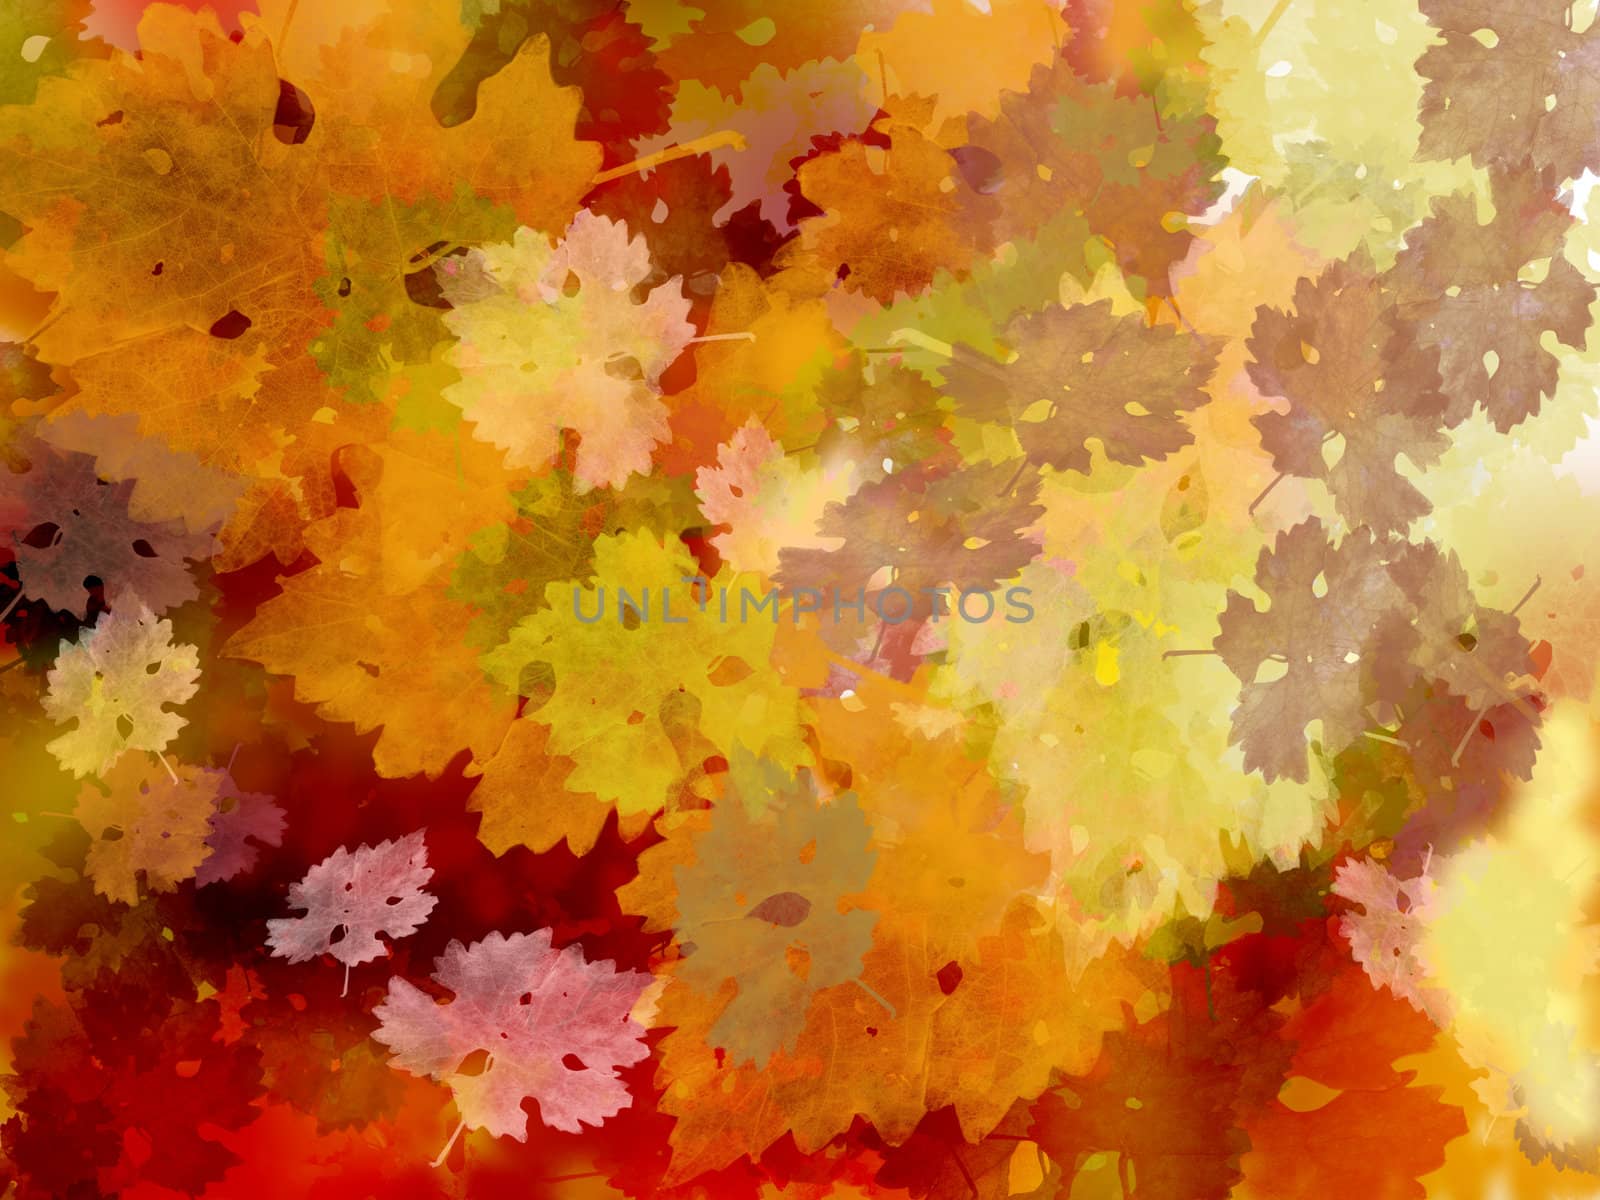 Edge-to-edge design of multiple colorful vine-leaf shapes. Good seasonal background.